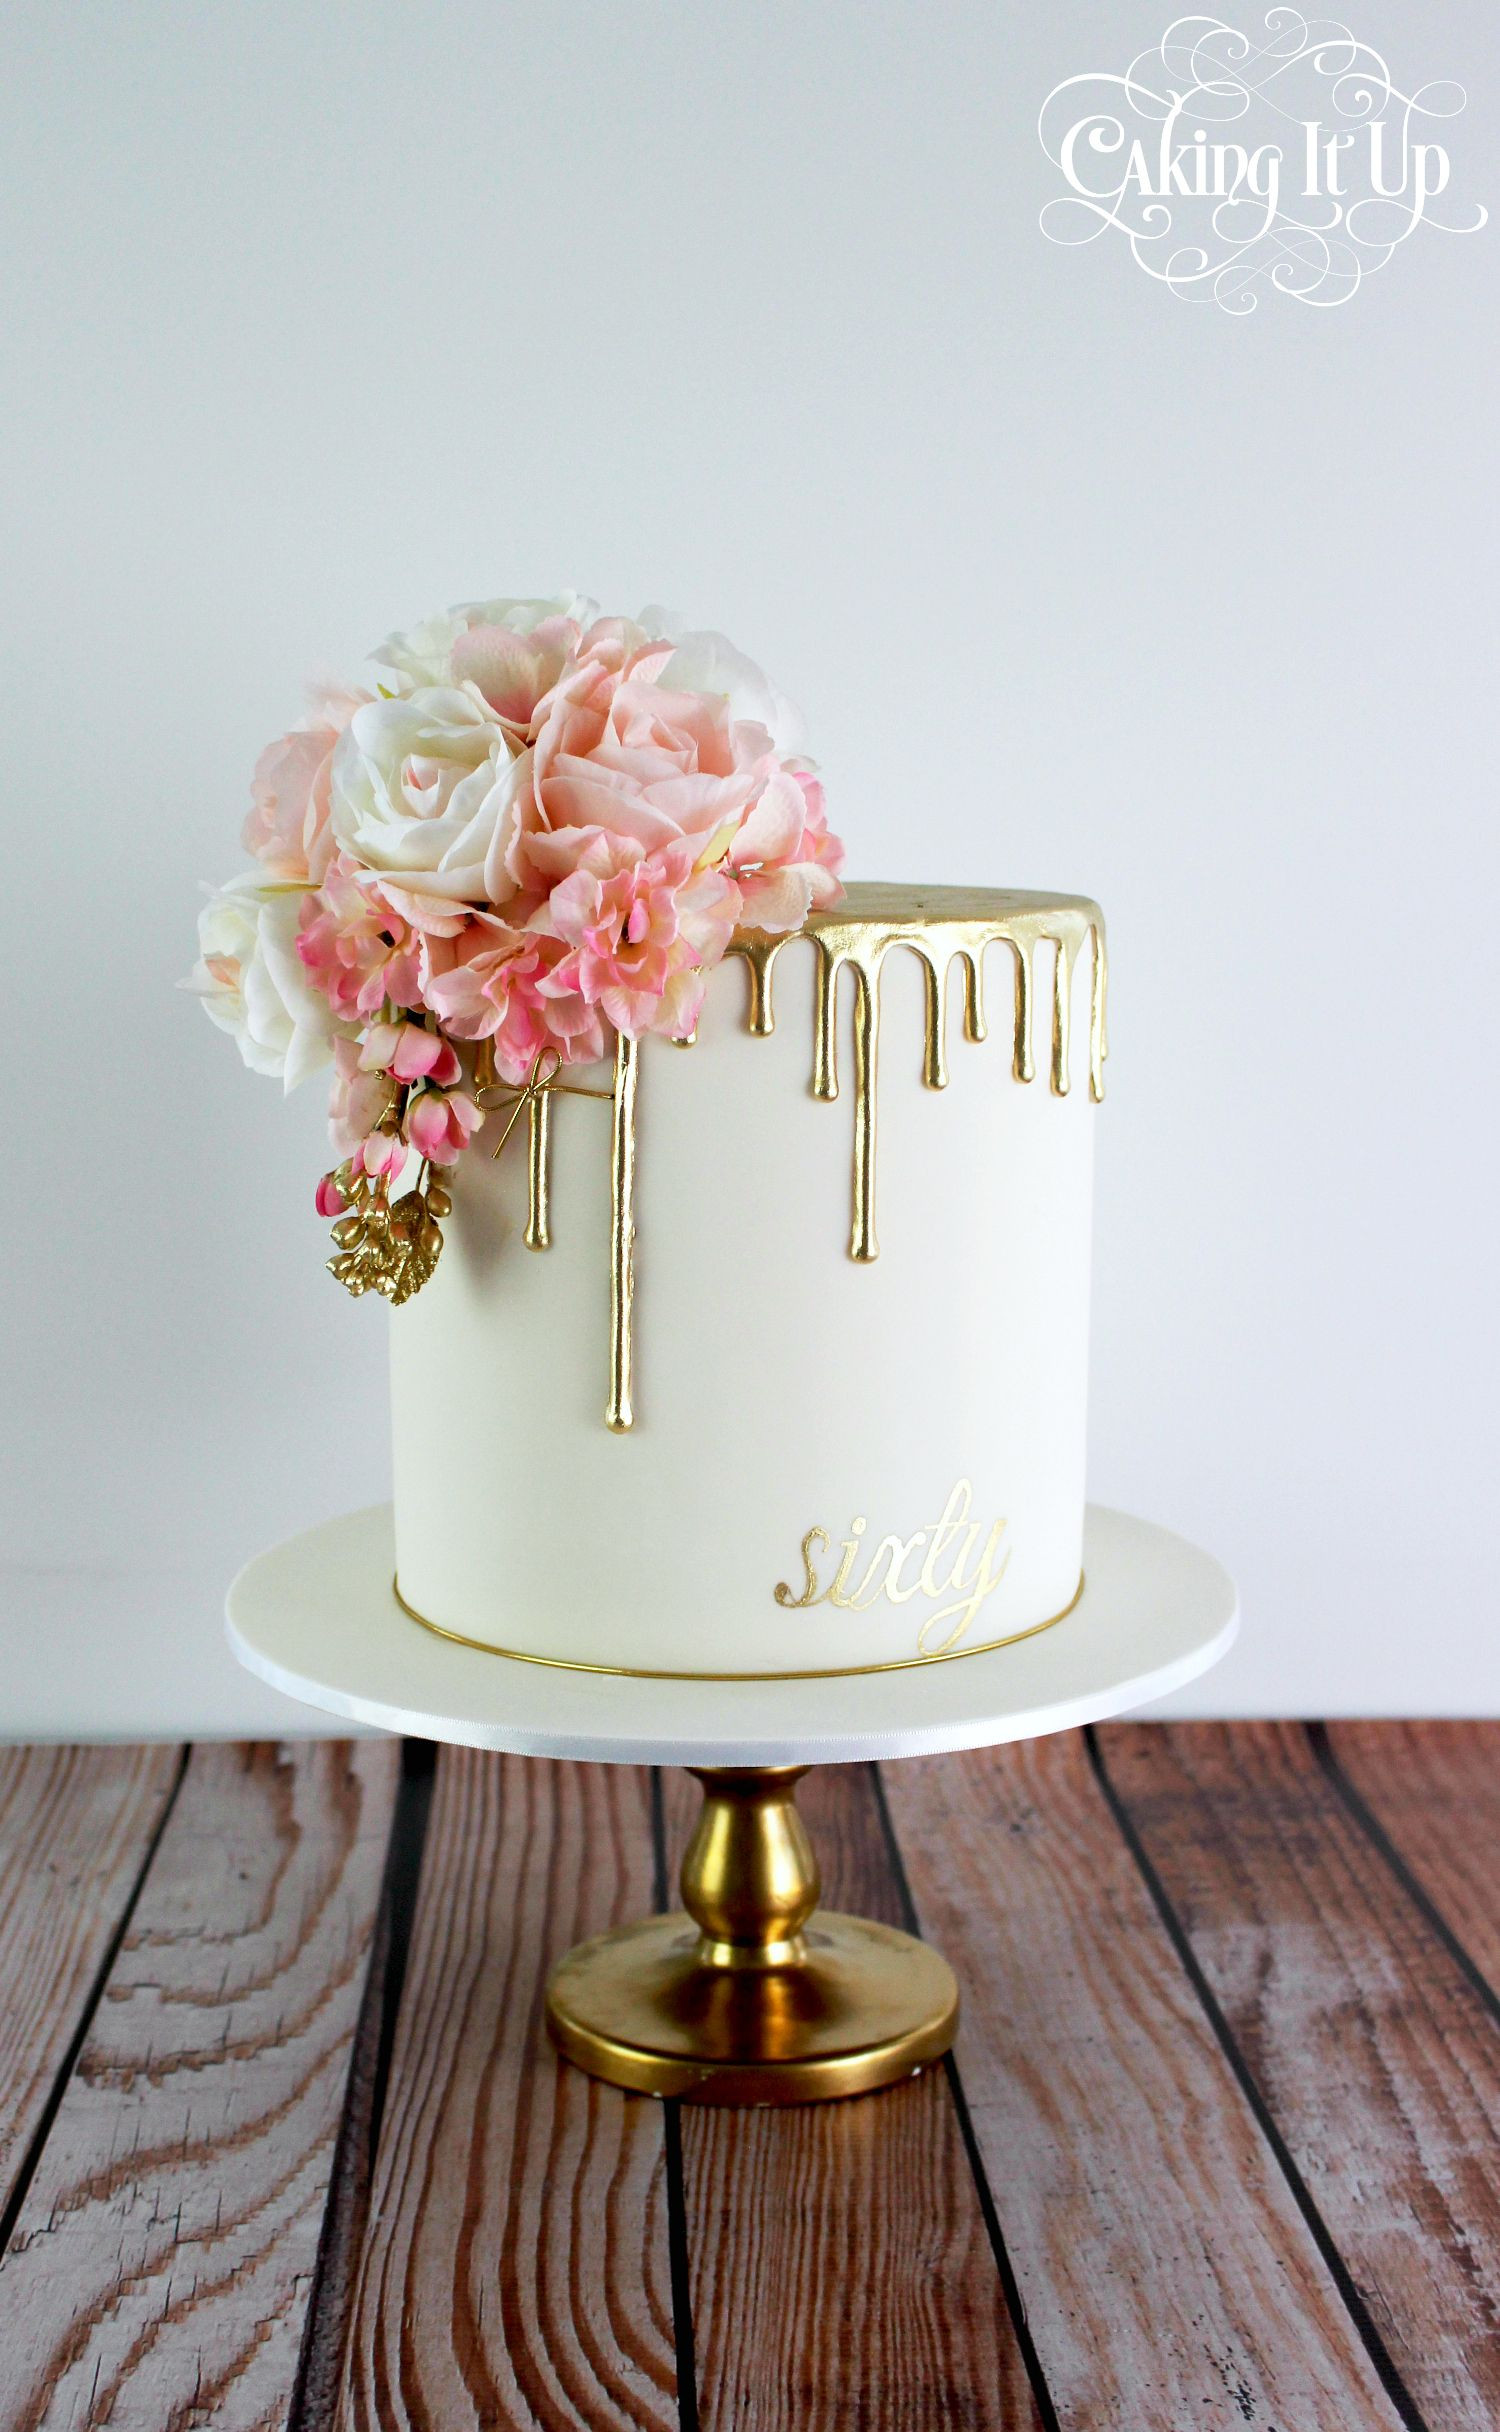 Elegant Birthday Cakes
 Classy and elegant golden drizzle 60th birthday cake with